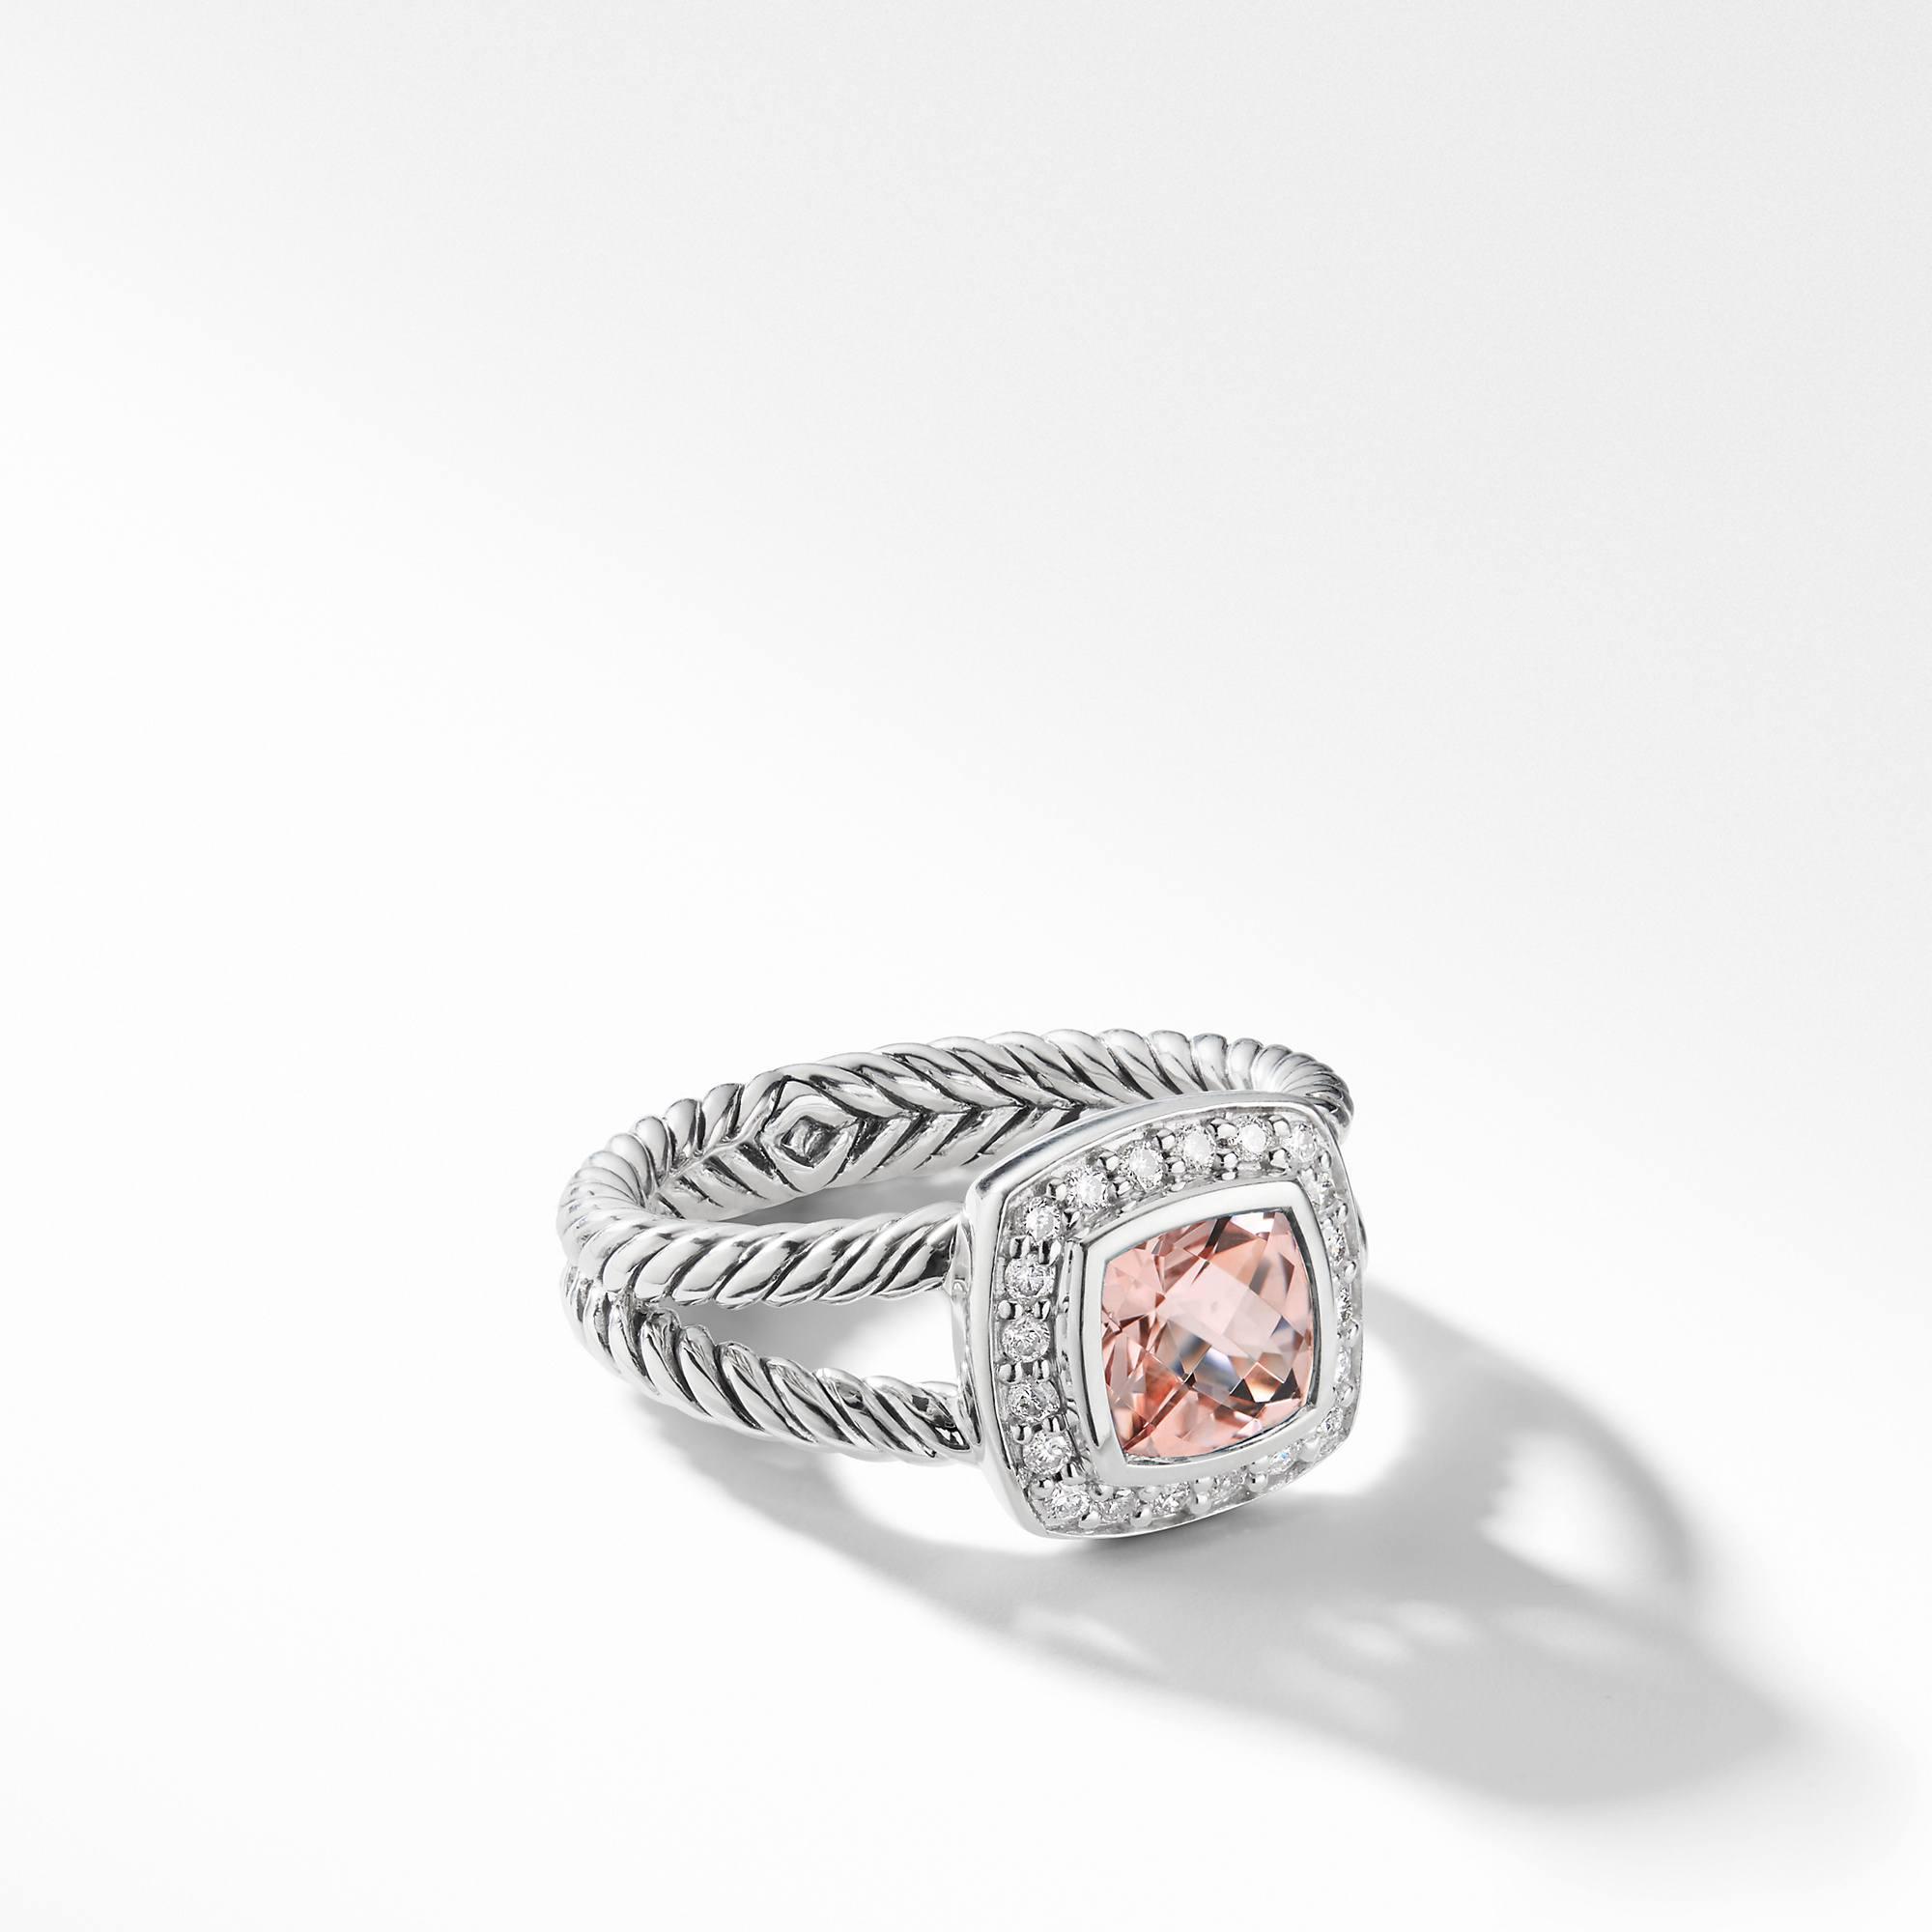 David Yurman Petite Albion Ring with Morganite and Diamonds, size 6